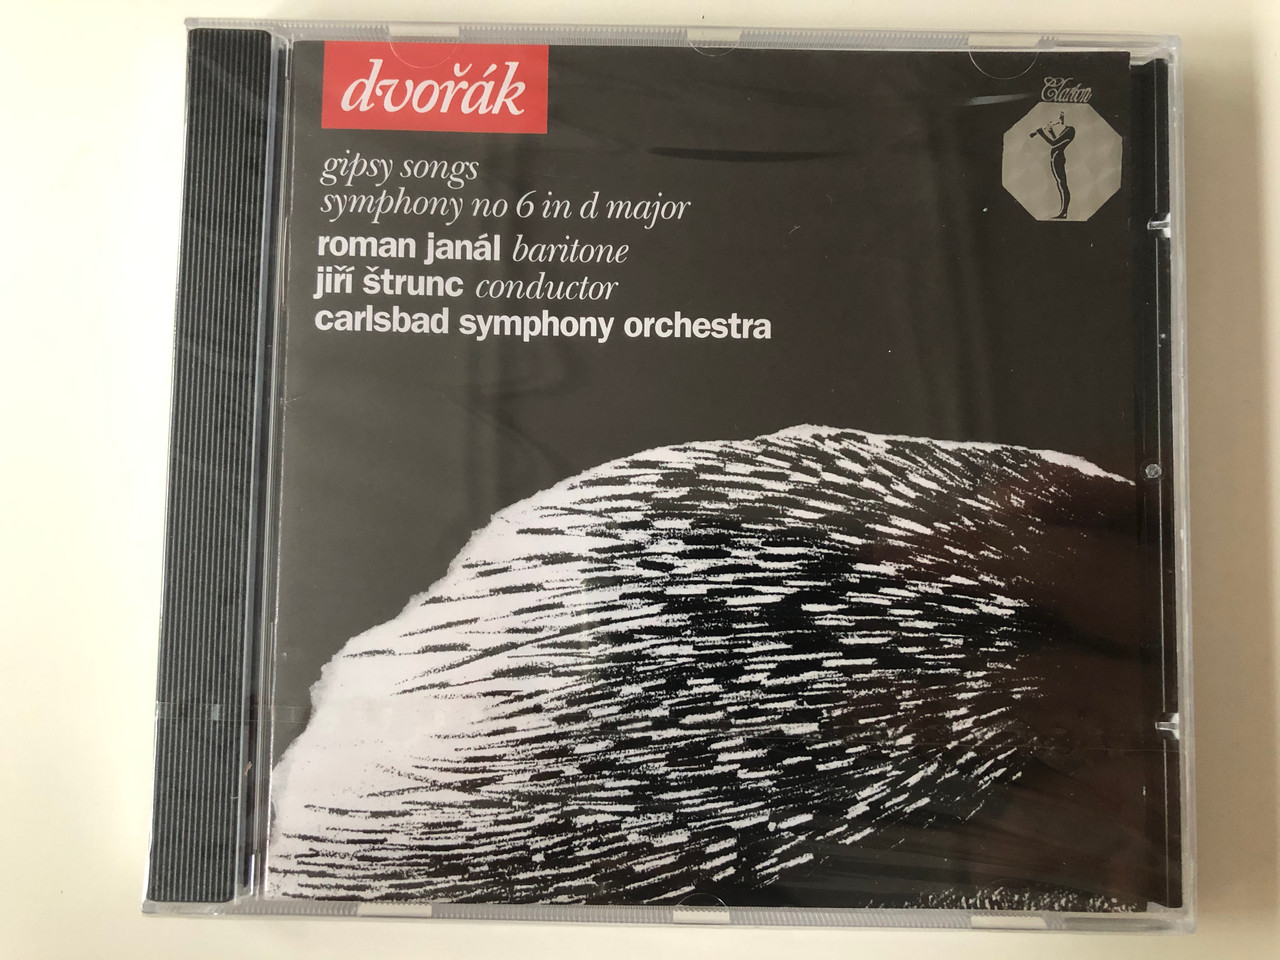 Dvorak - Gipsy songs, Symphony no 6 in d major / Roman Janal - baritone,  Jiri Štrunc - conductor, Carlsbad Symphony Orchestra / Clarton Audio CD  1997 / CQ 0032-2 031 - bibleinmylanguage